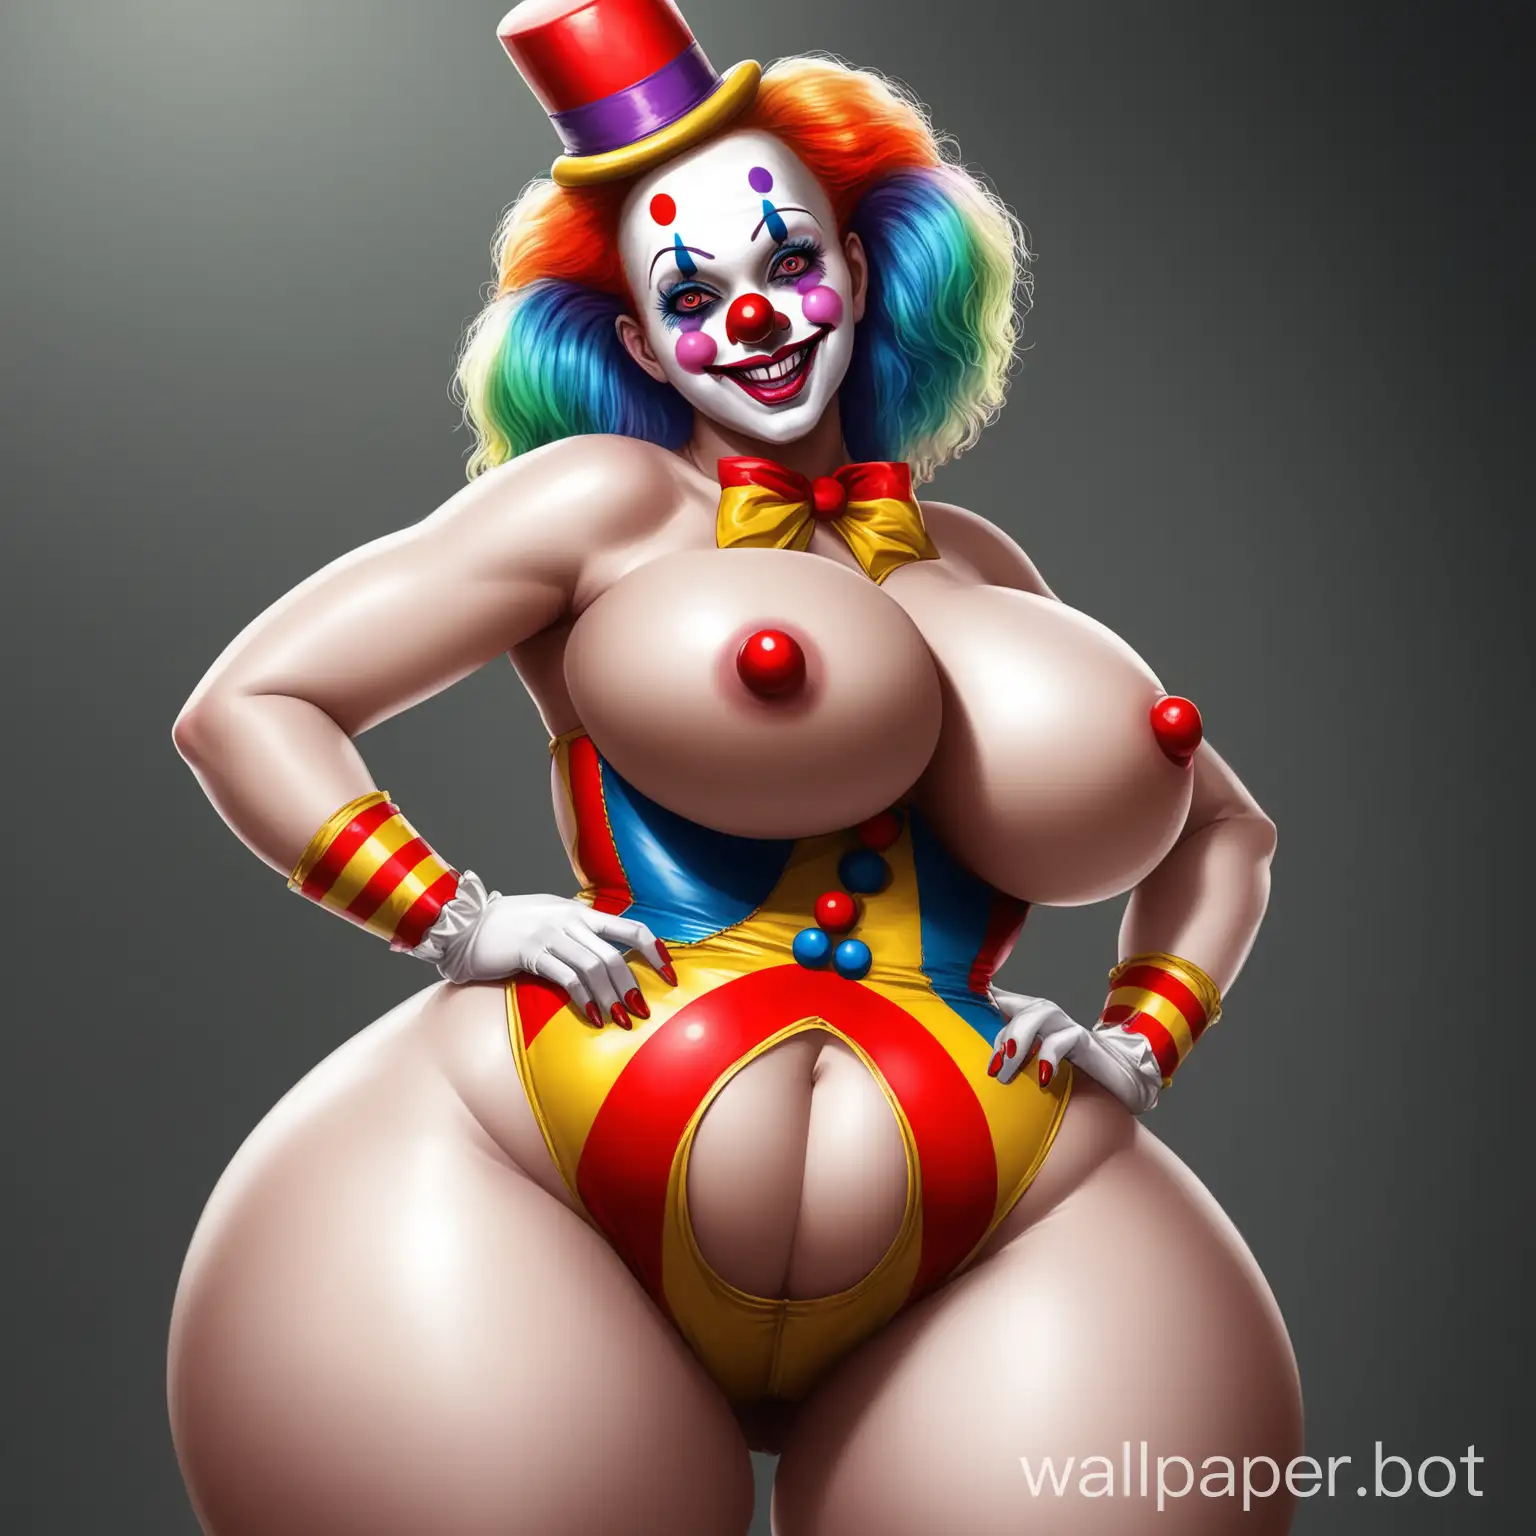 a very sexy clown women with very big hips grabbing her butt